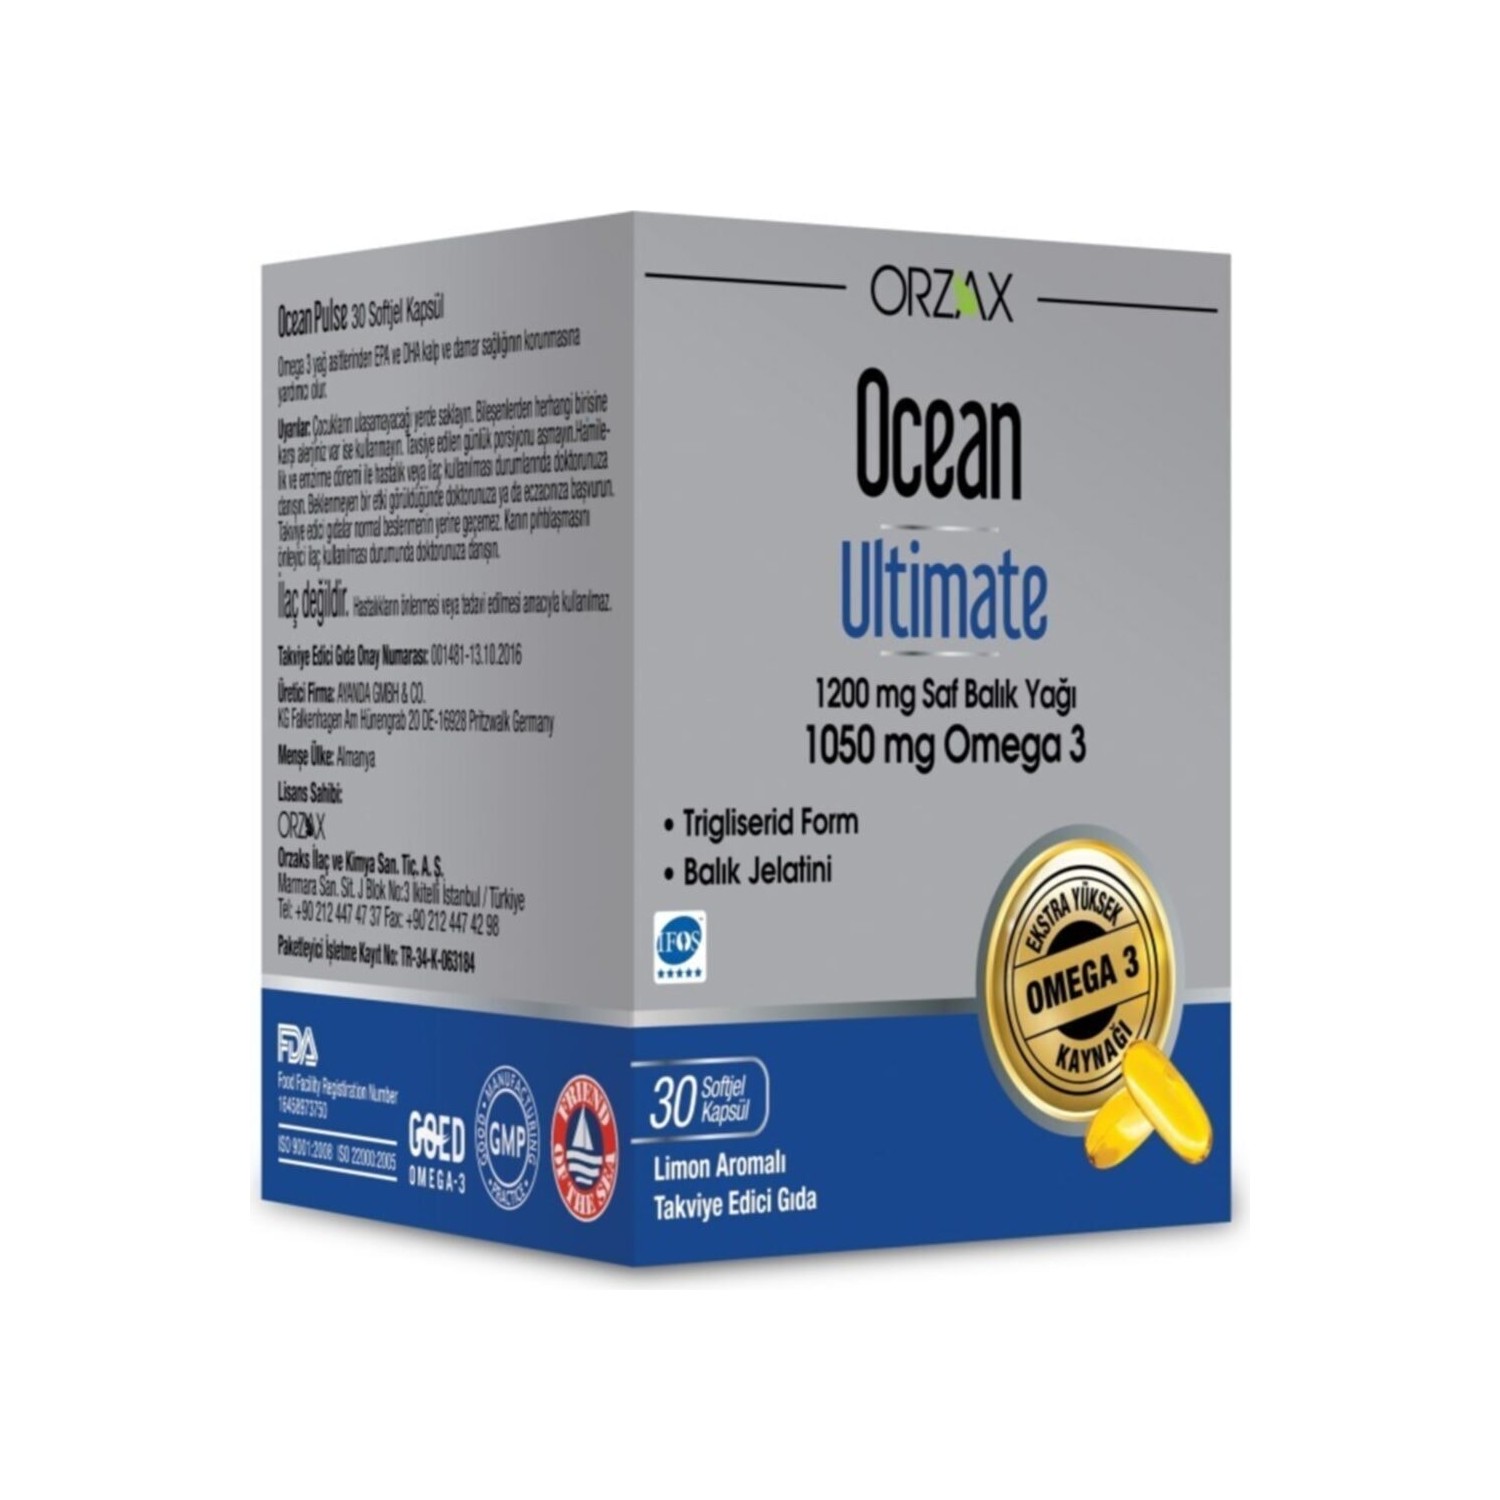 Пищевая добавка Ocean Supplement Ocean Ultimate 1200 мг, 30 капсул омега 3 ocean ultimate 1050 мг 3 упаковки по 30 капсул